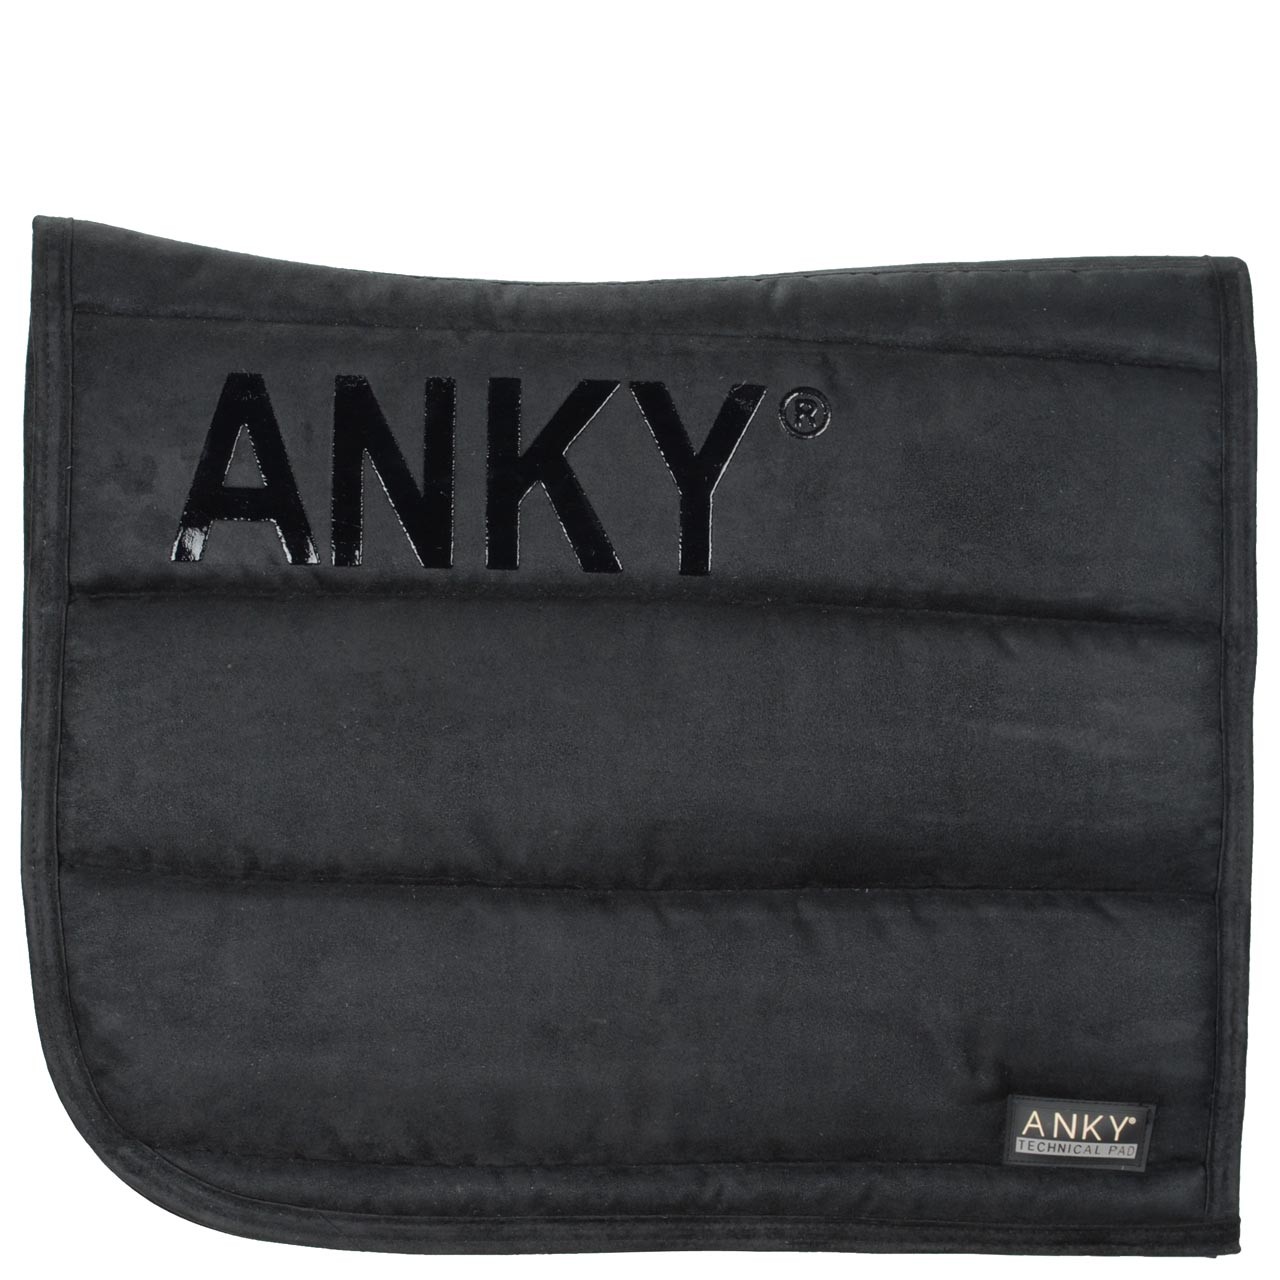 Anky Basis pad zwart maat:full